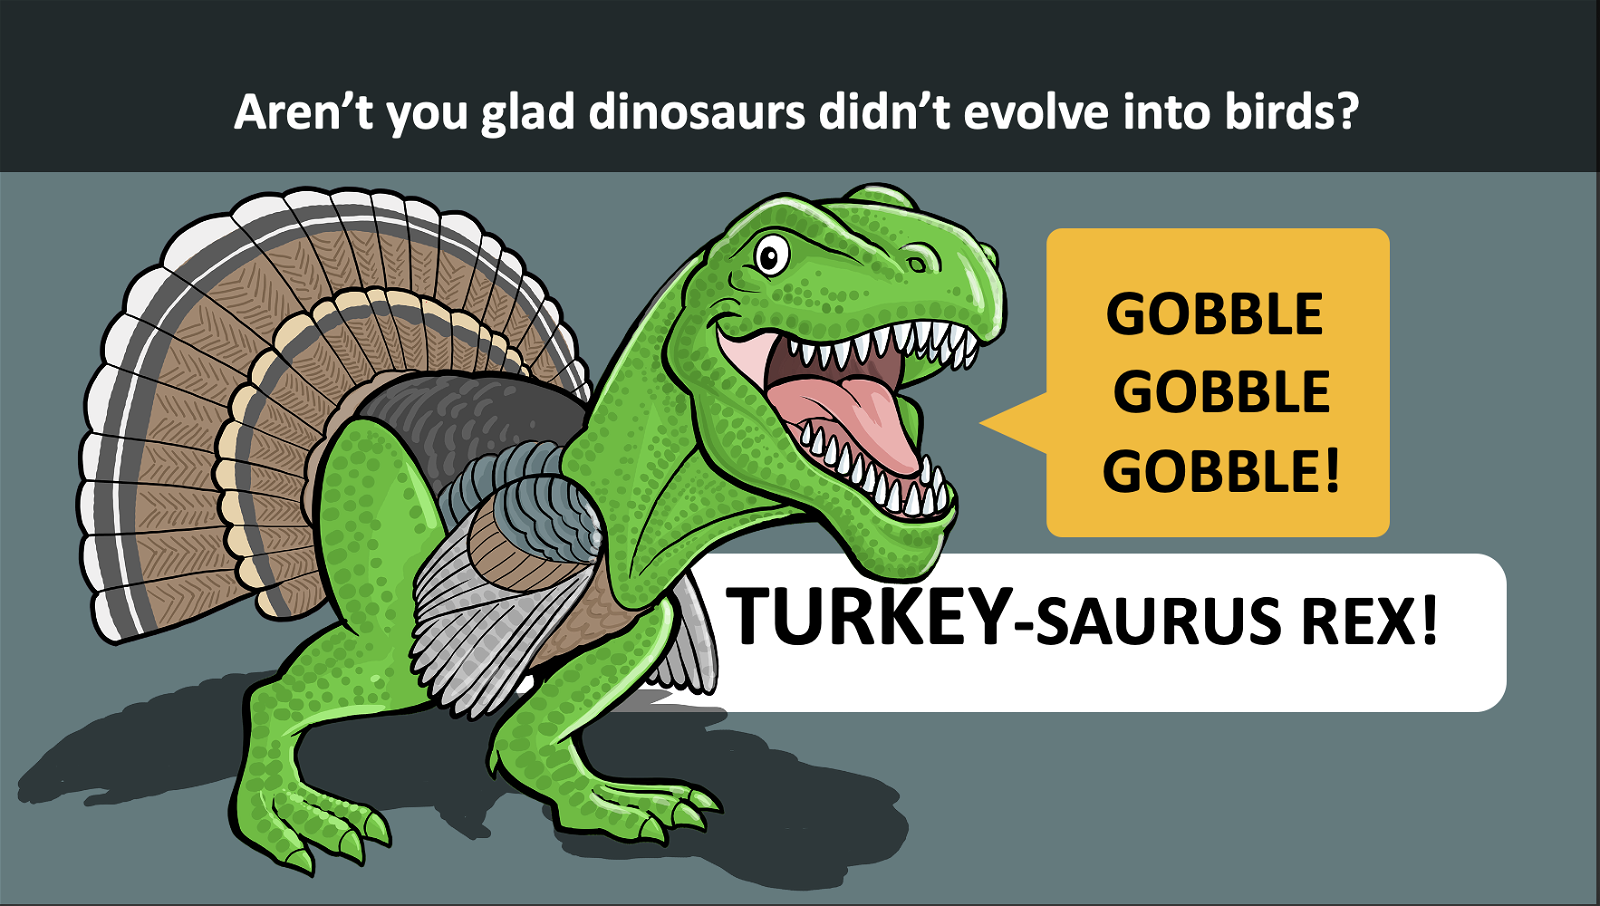 Turkey-saurus rex